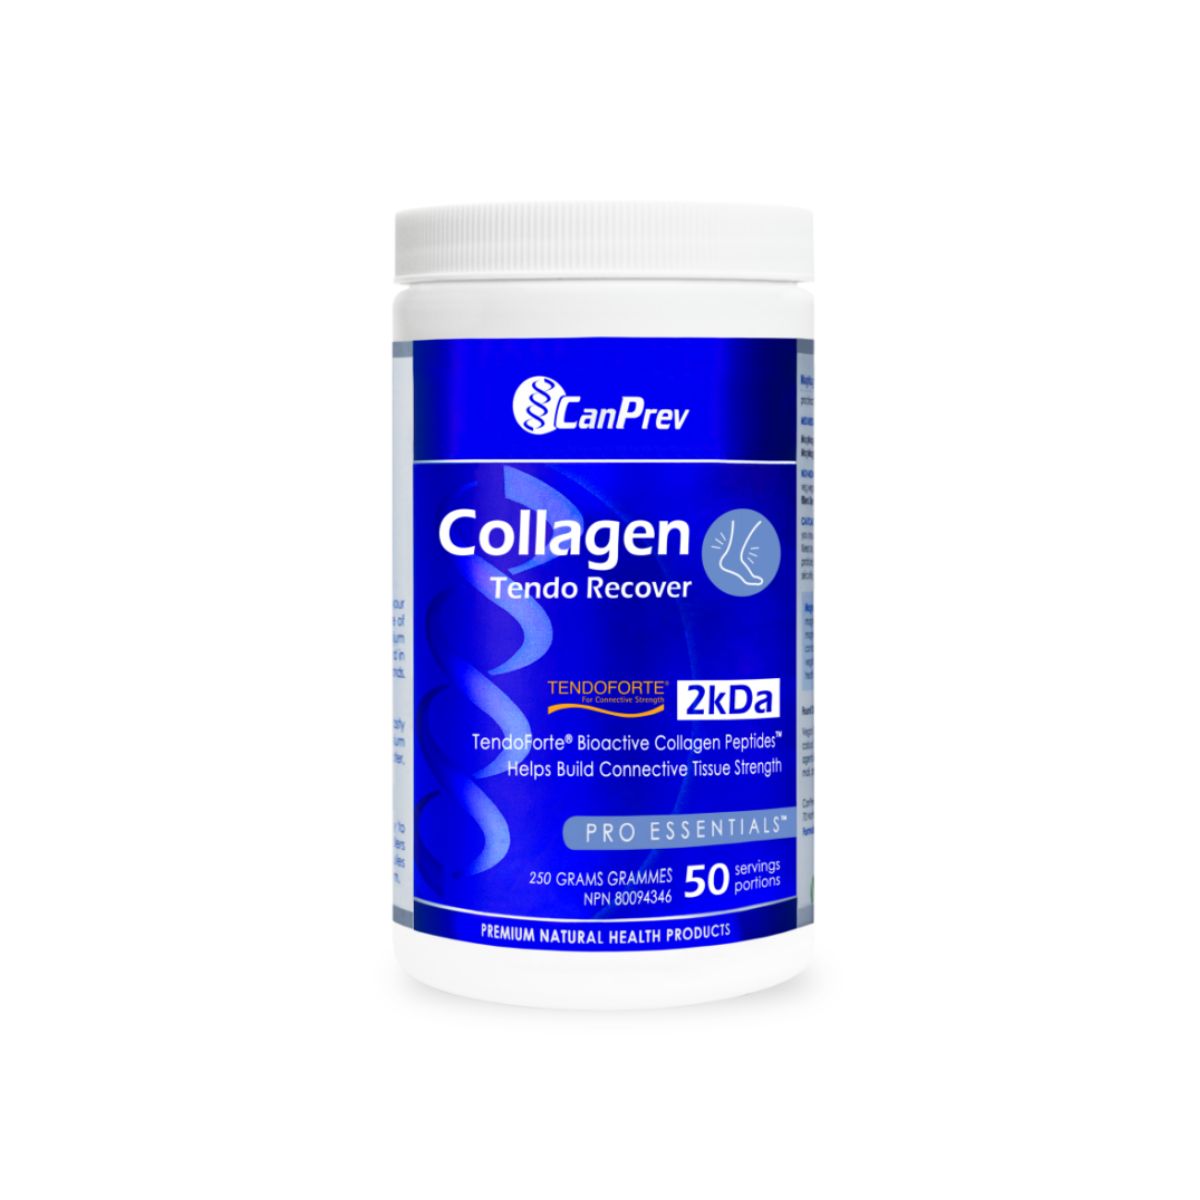 CanPrev Collagen Tendo Recover Powder 250g